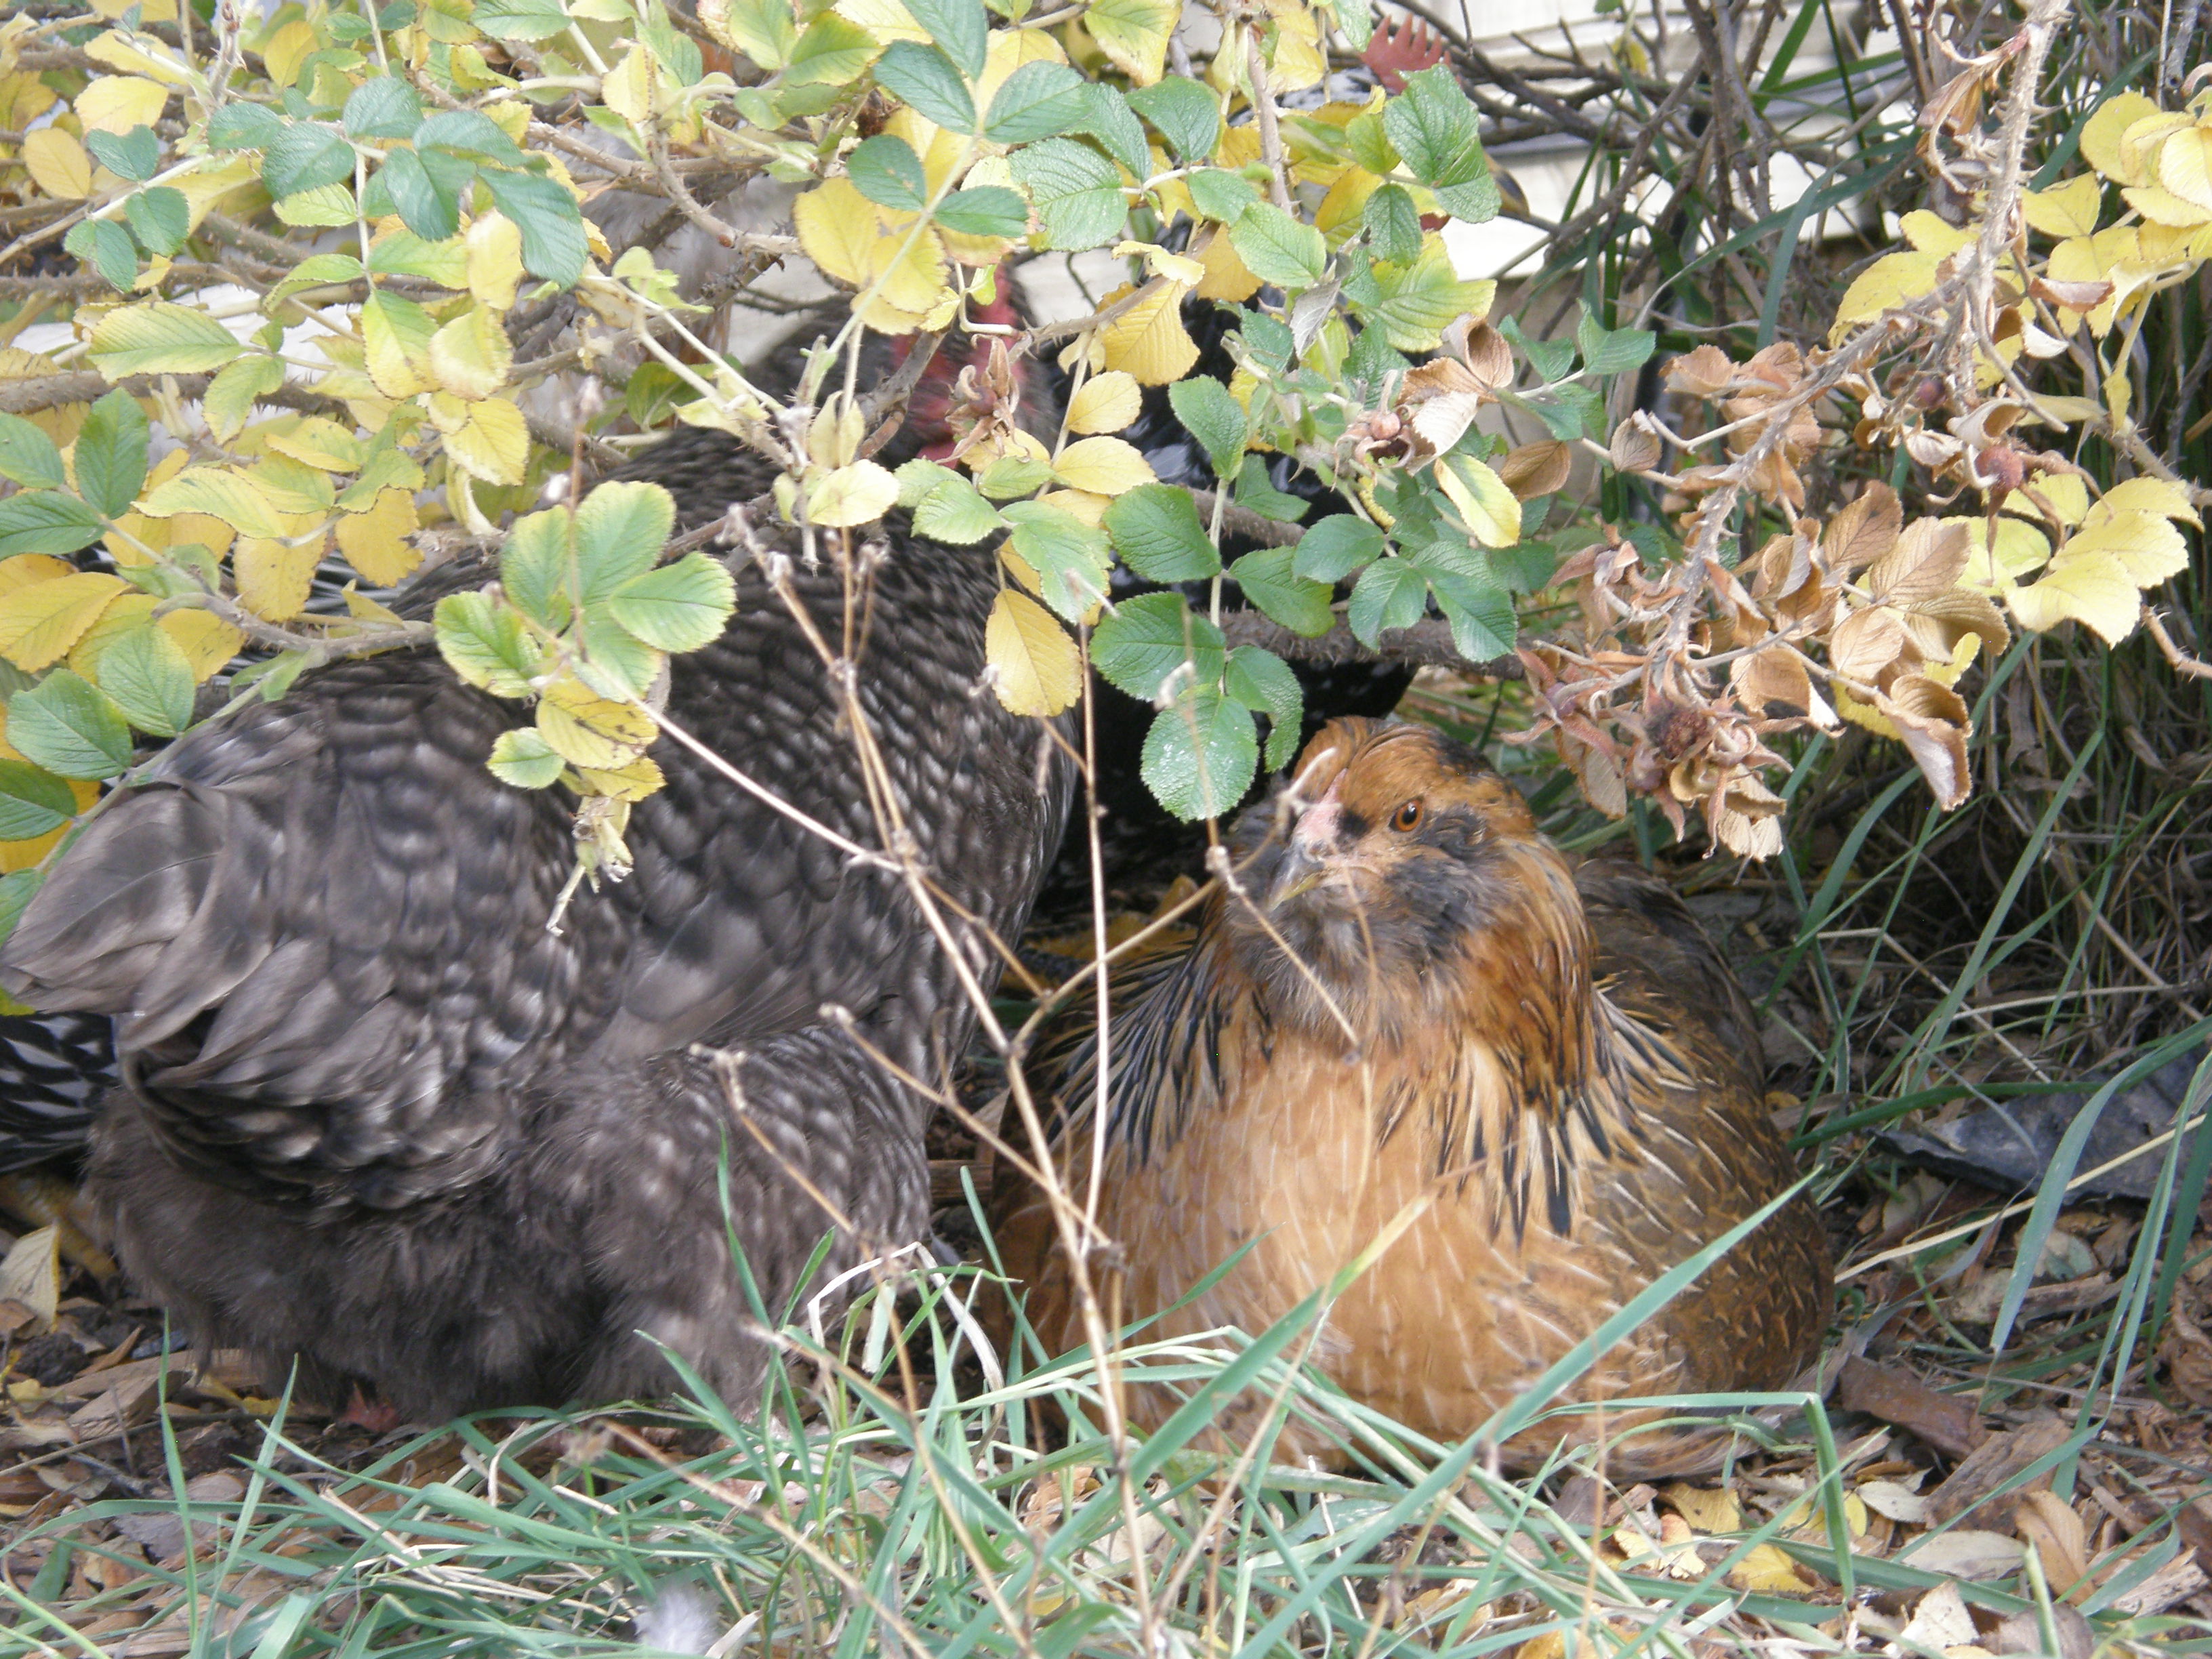 Then hens enjoying sitting under the rose bush.